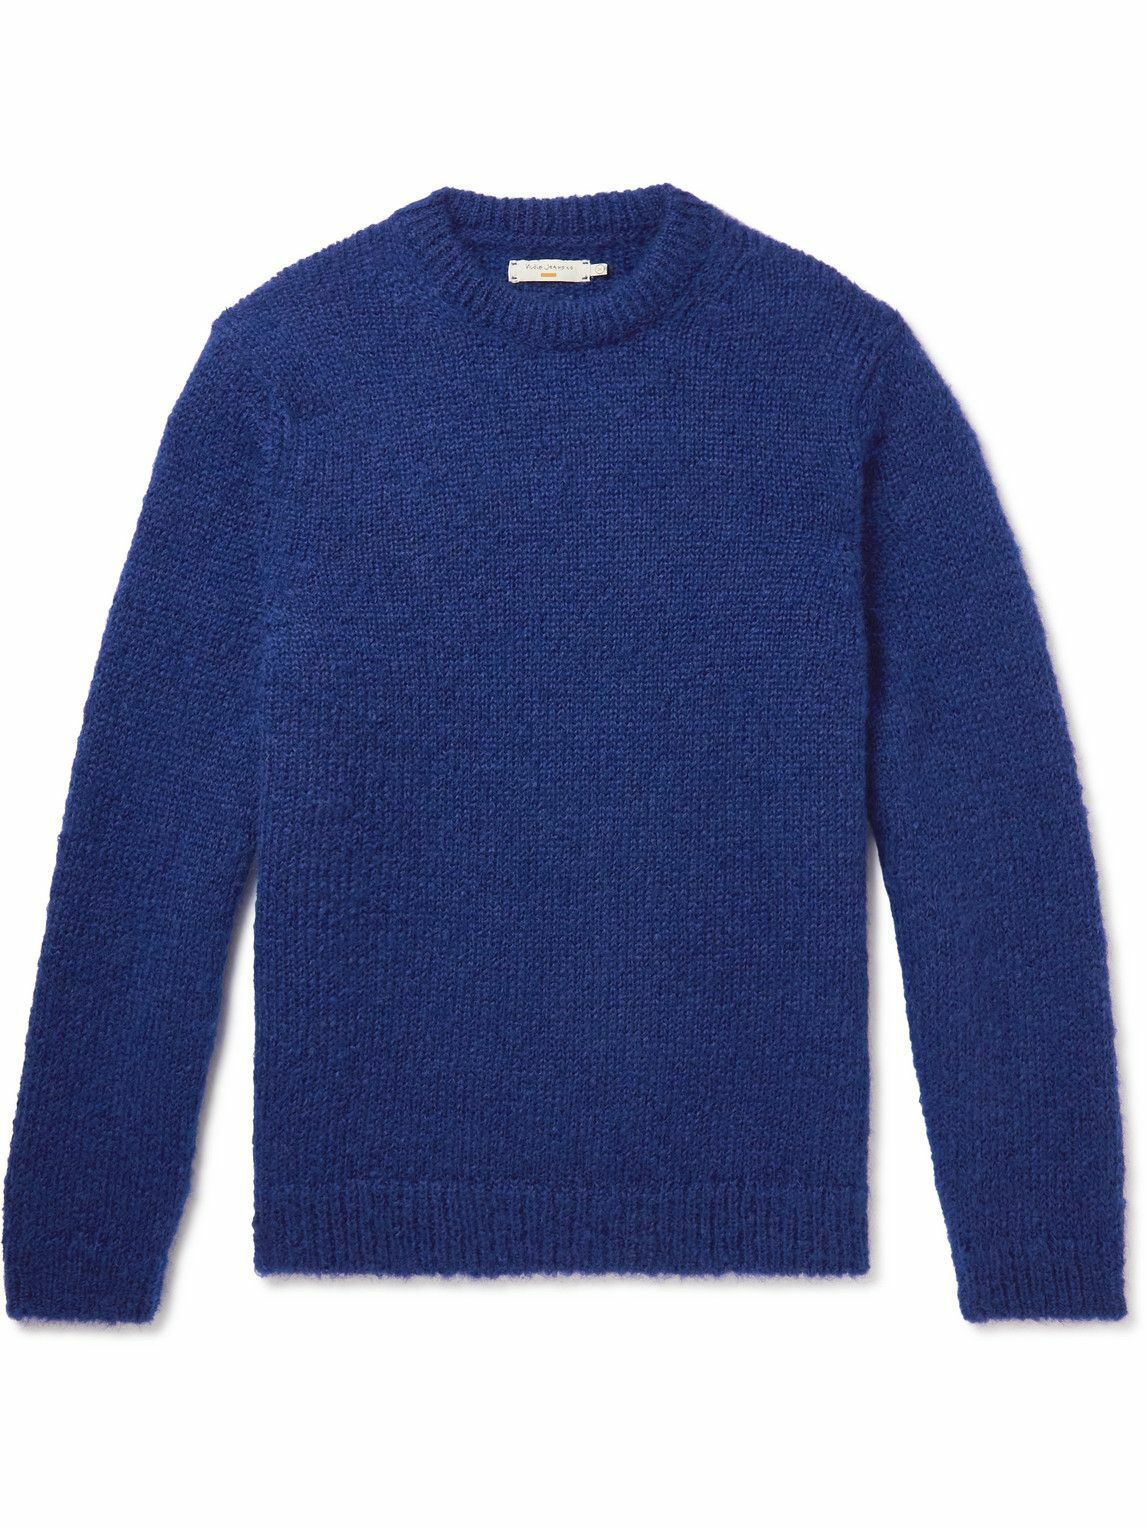 Nudie Jeans - August Mohair Sweater - Blue Nudie Jeans Co